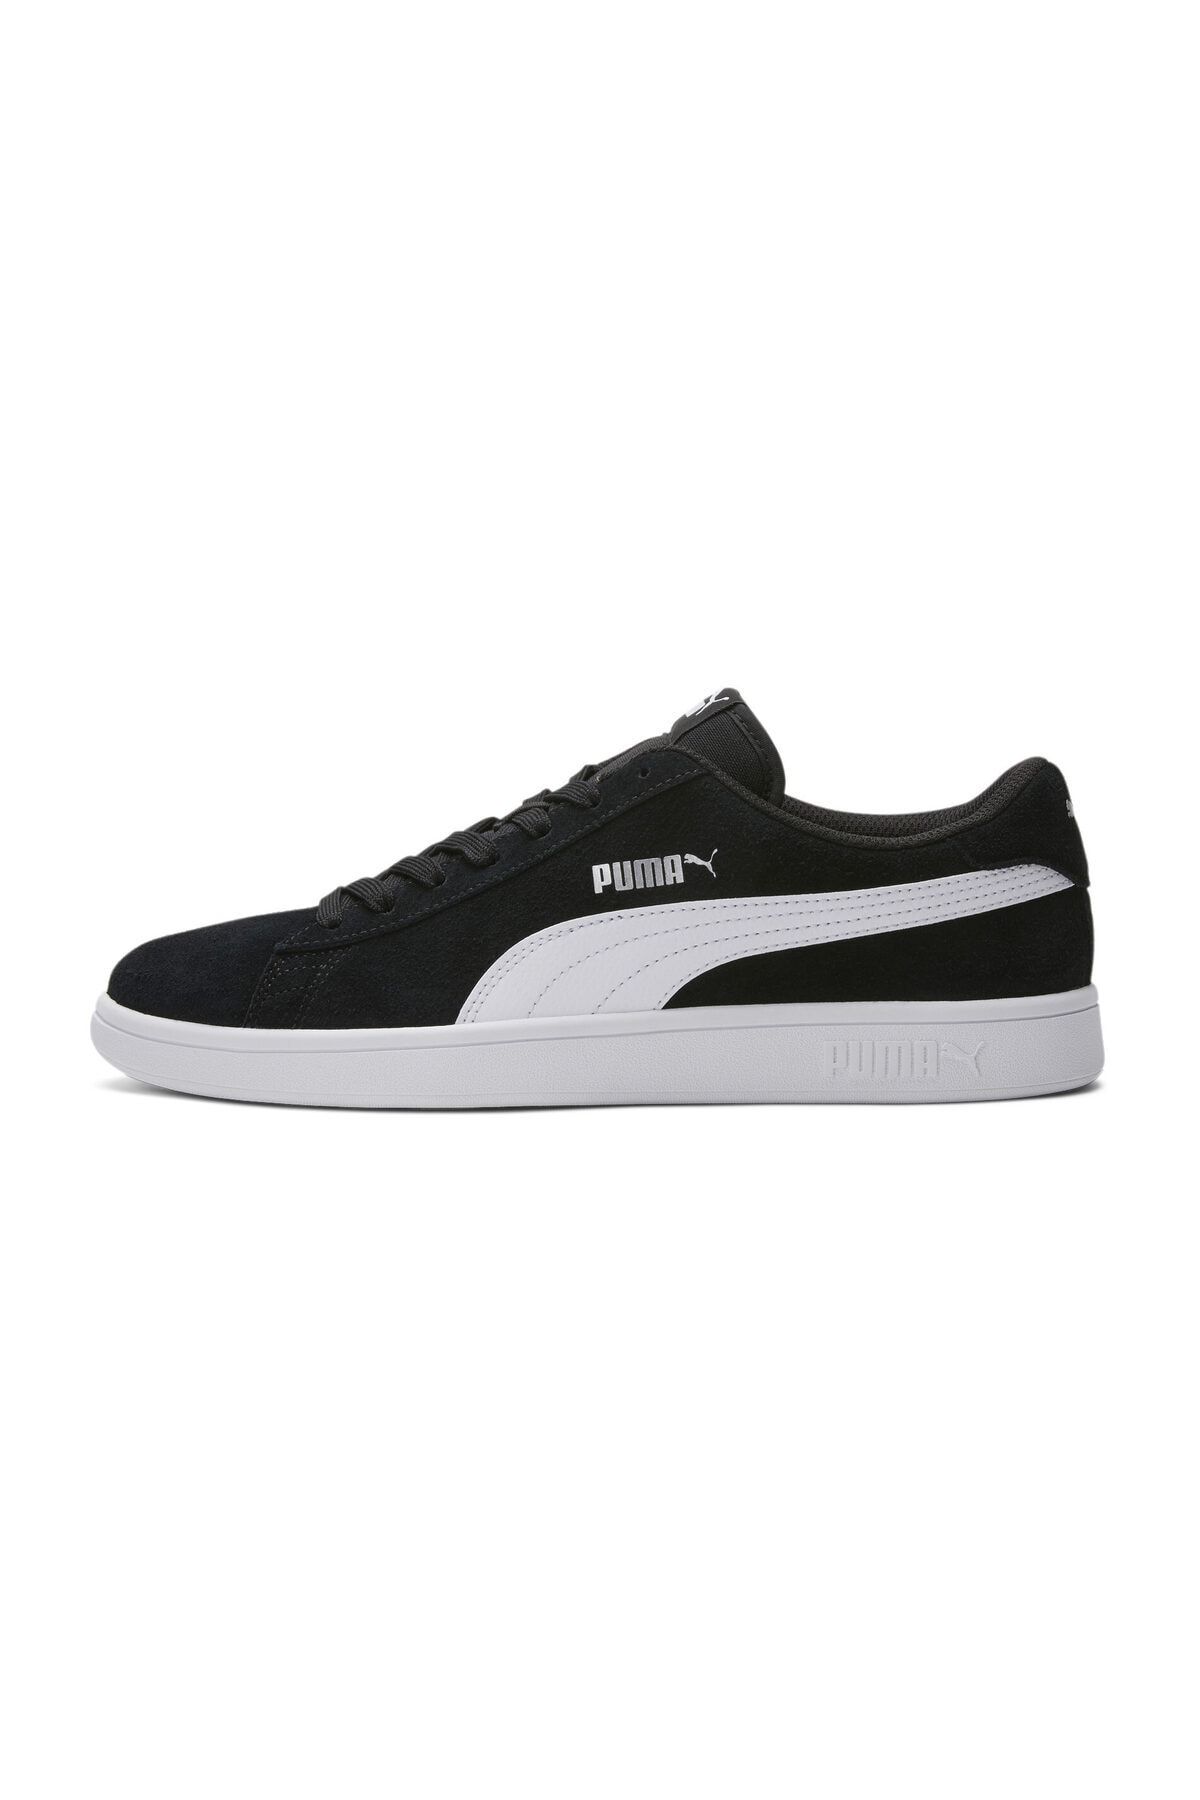 Puma SMASH V2 Siyah Unisex Sneaker Ayakkabı 100394756